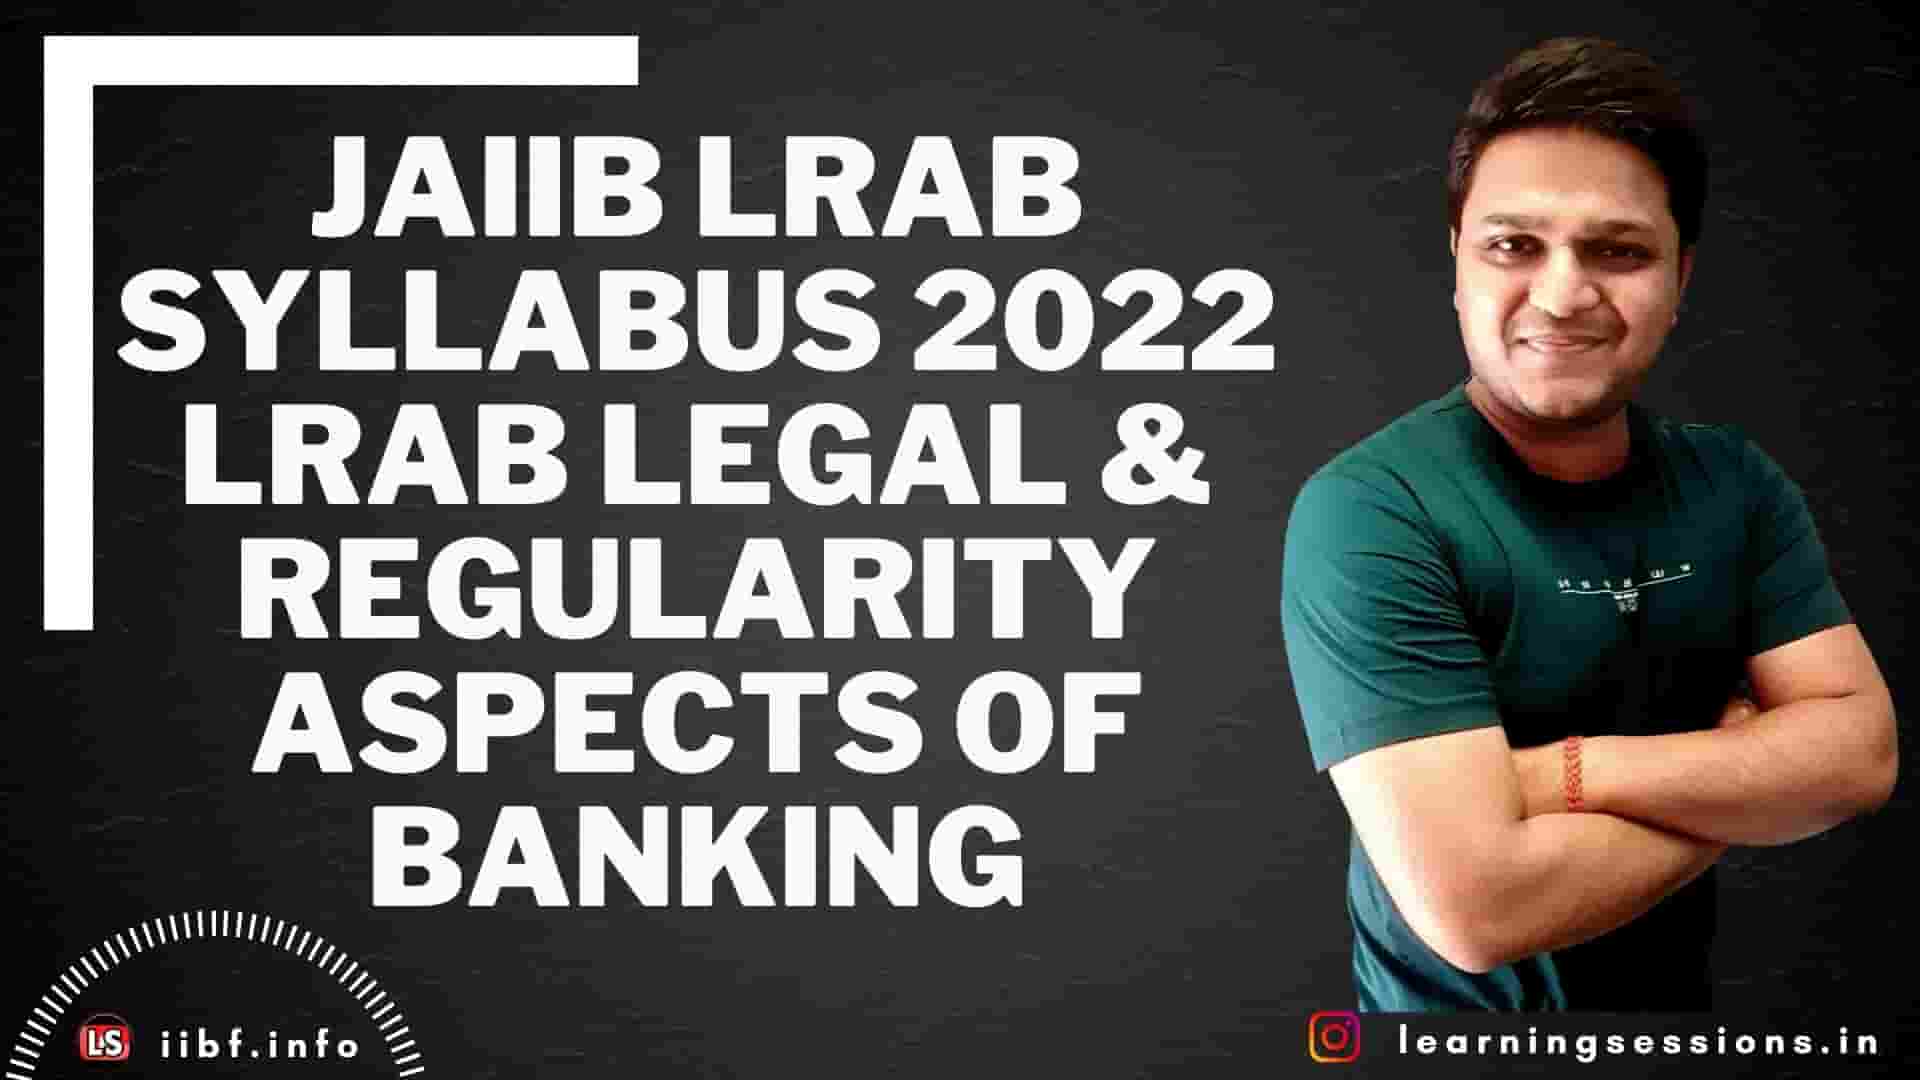 JAIIB LRAB SYLLABUS 2022 - LRAB LEGAL & REGULARITY ASPECTS OF BANKING